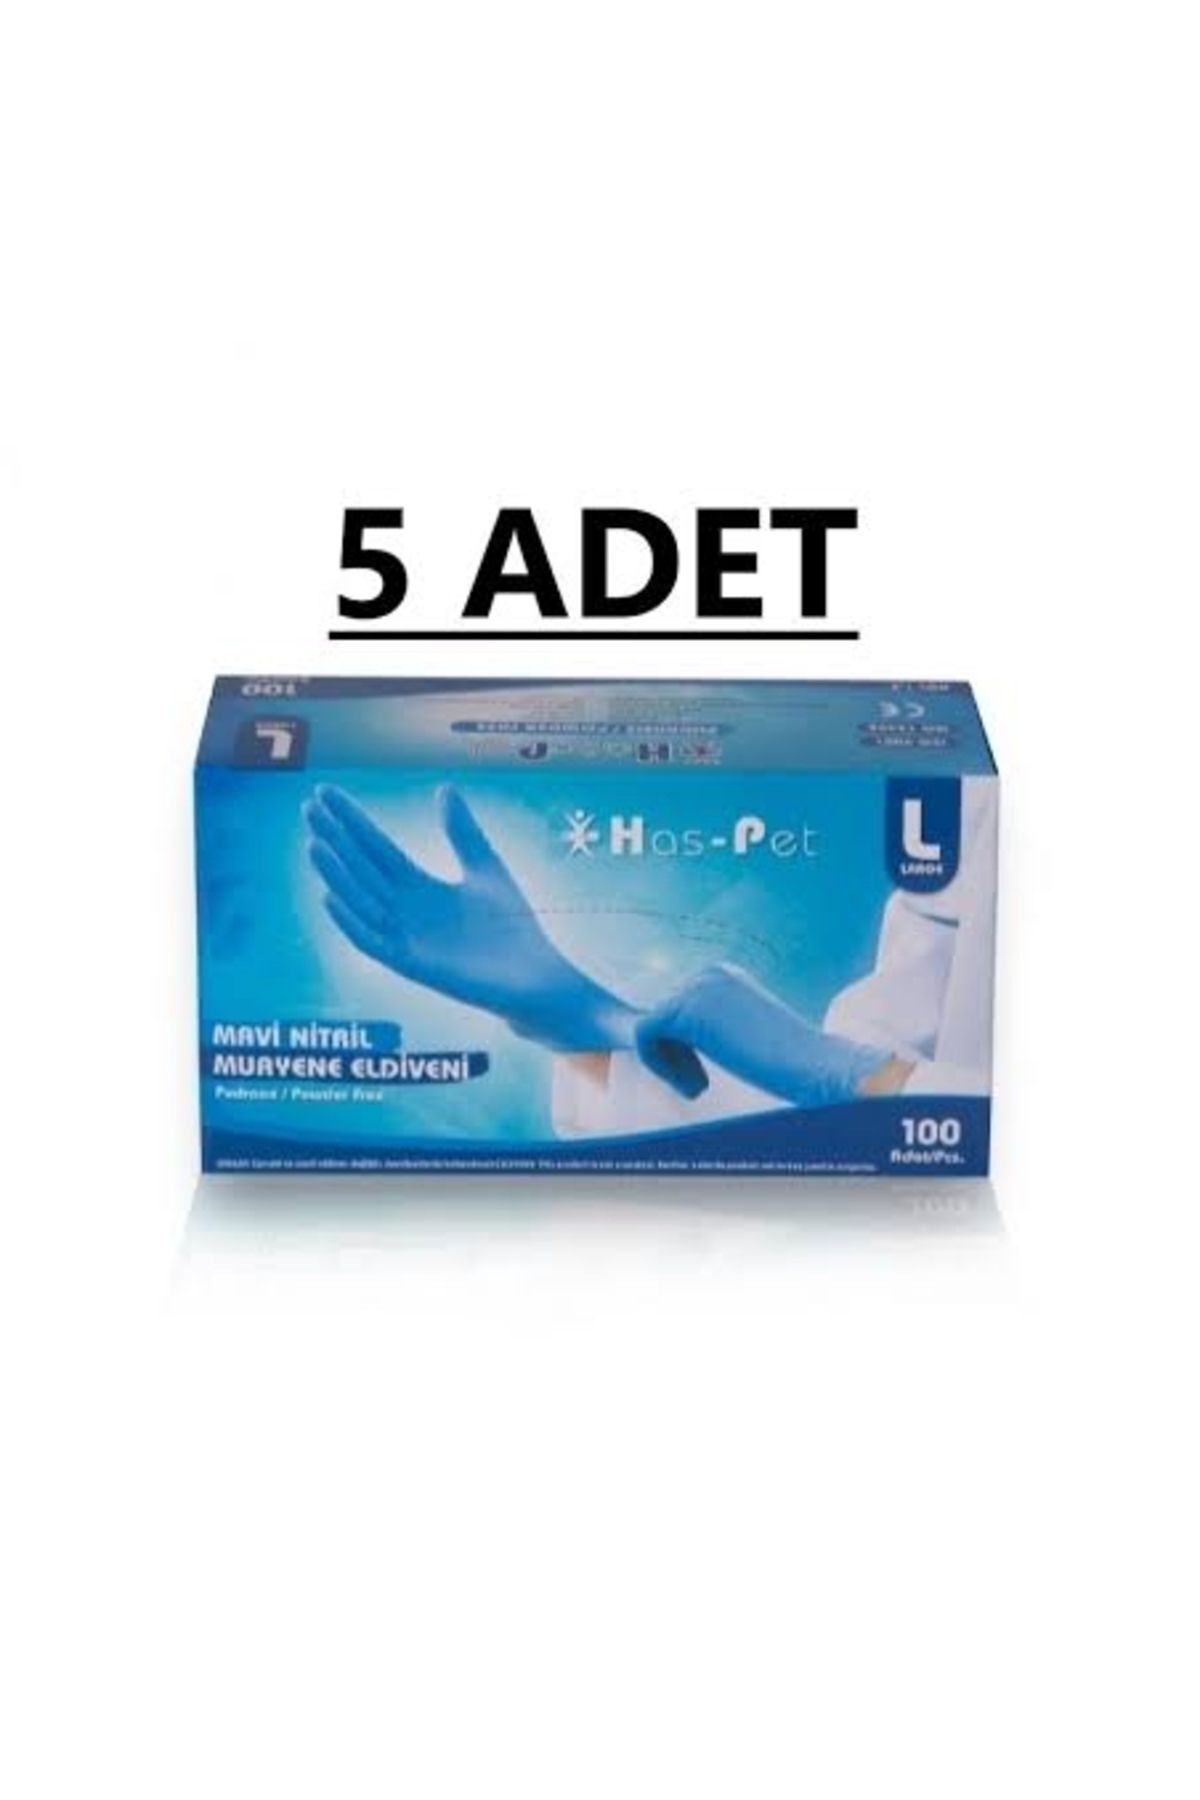 Has-Pet Haspet Mavi Nitril Eldiven L Beden- 5 Li Fırsat Paketi